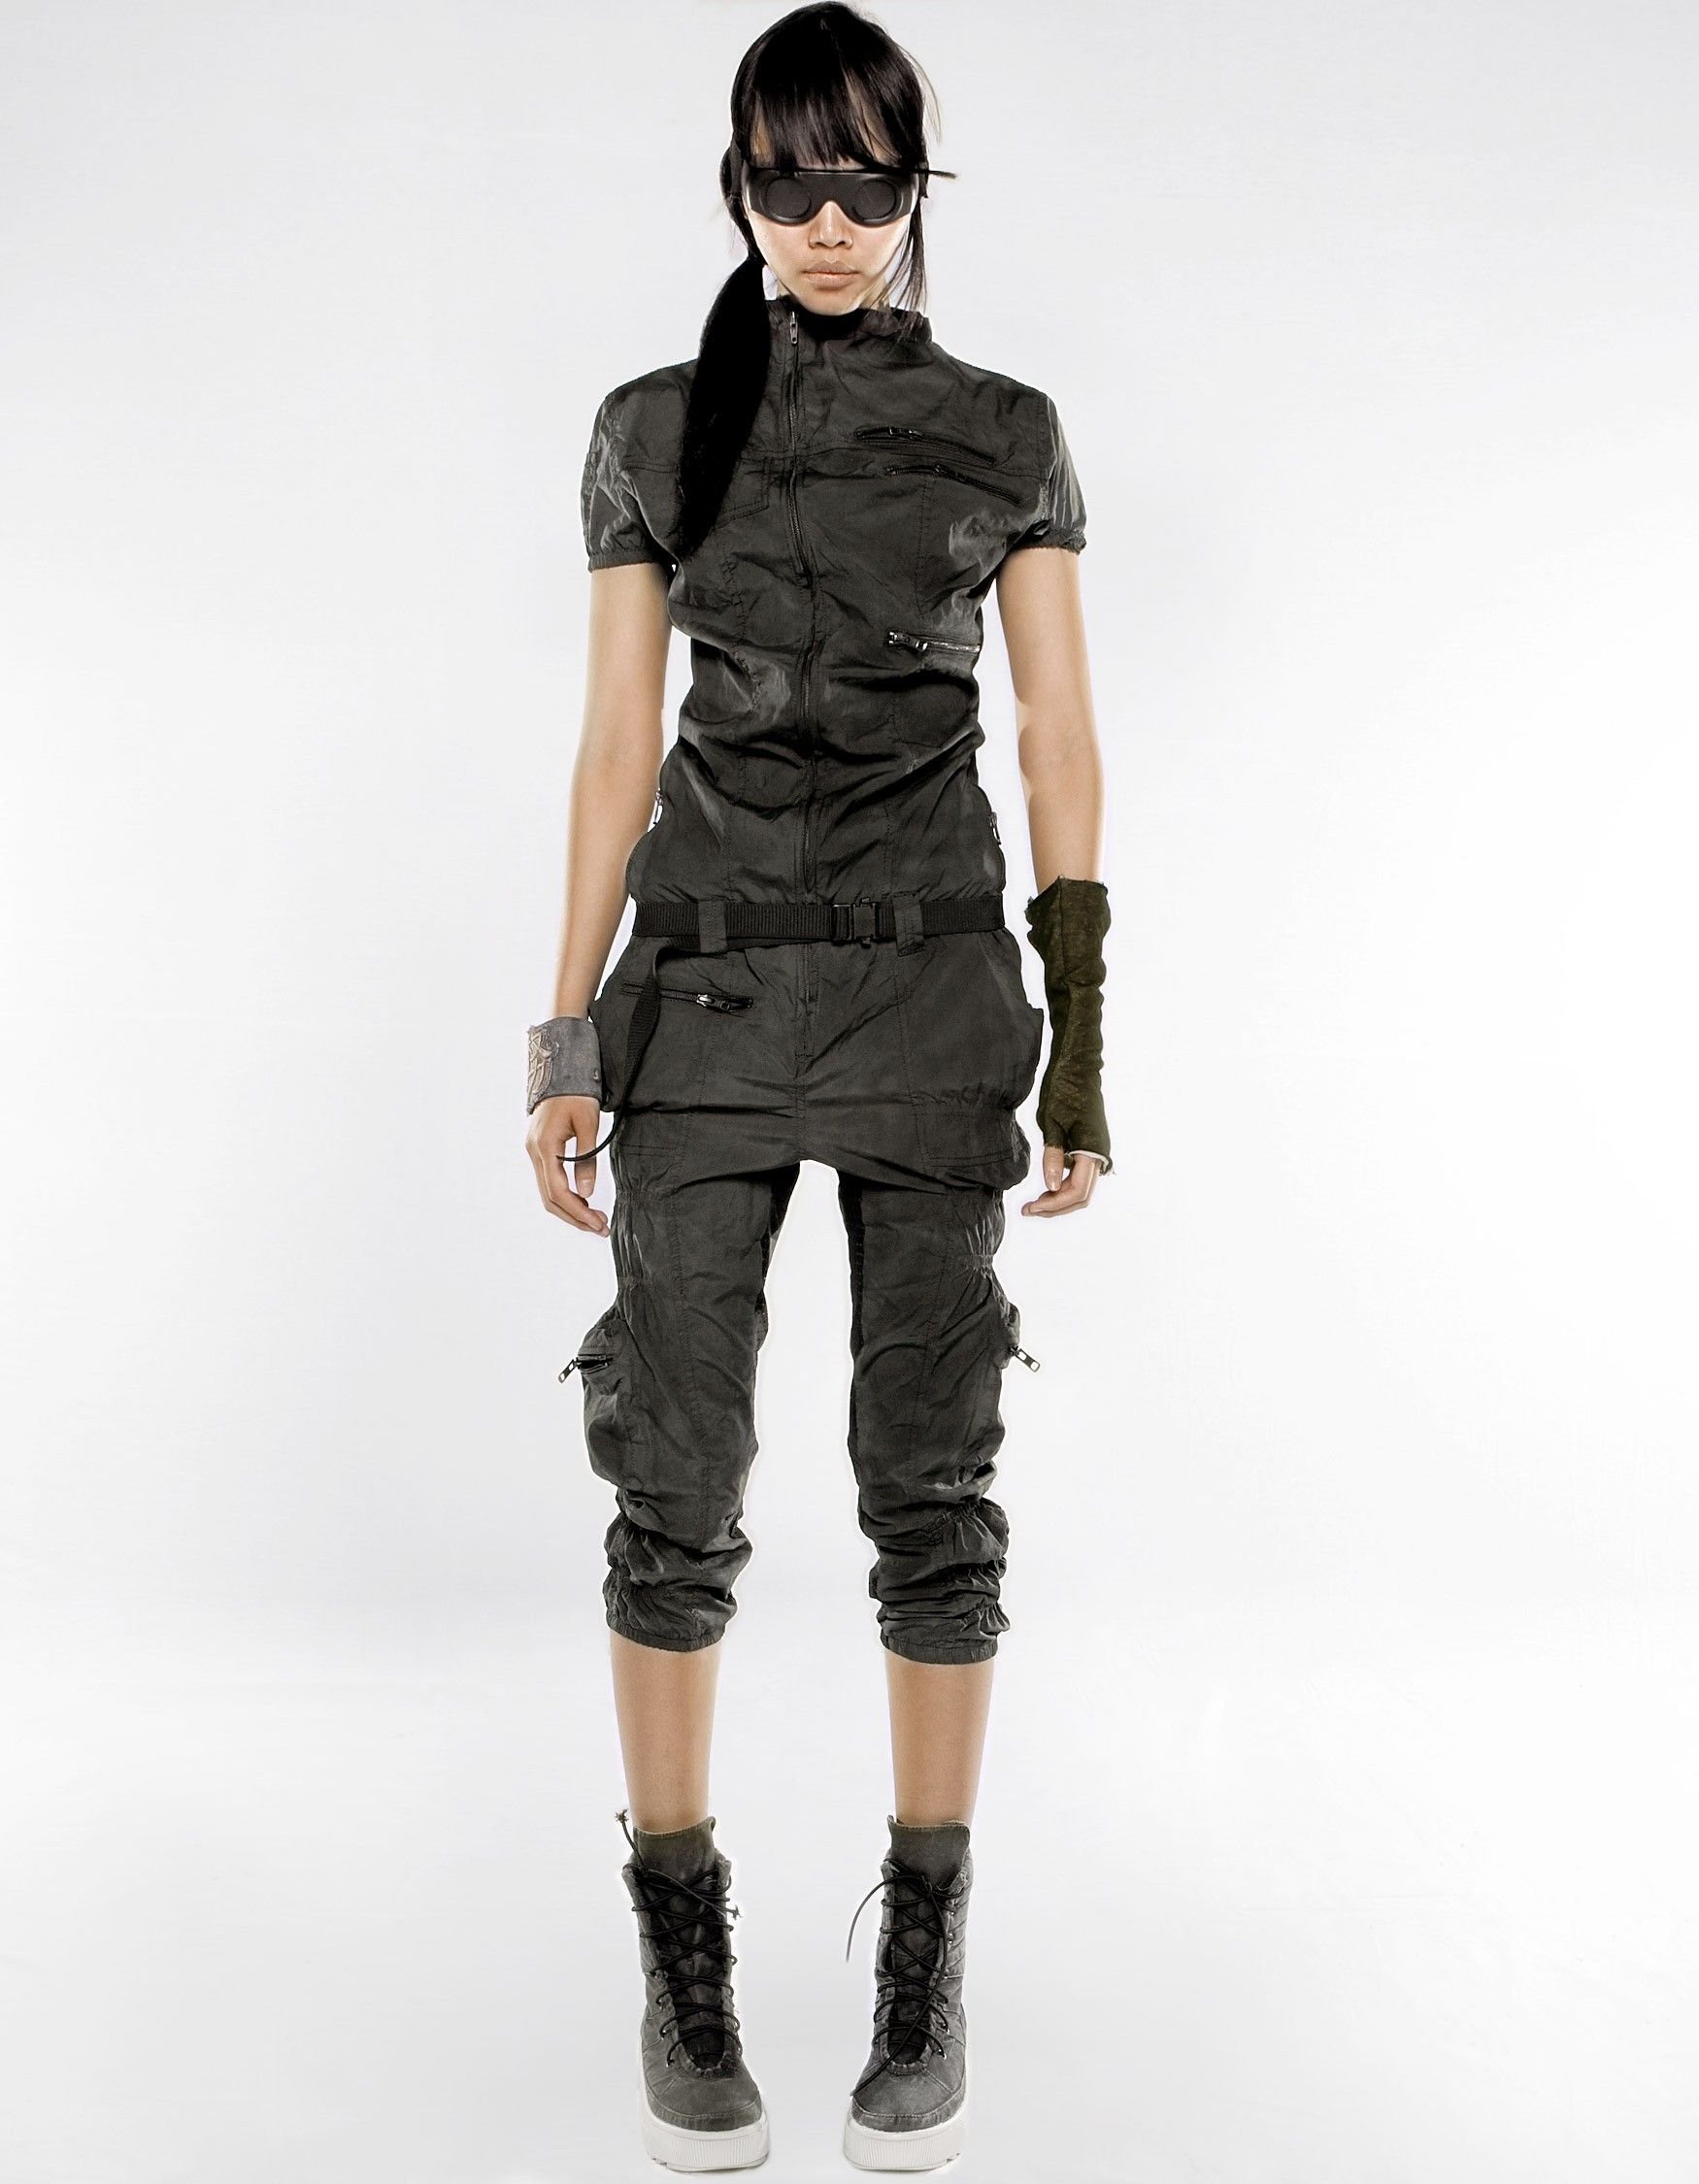 Cyberpunk clothes style фото 70